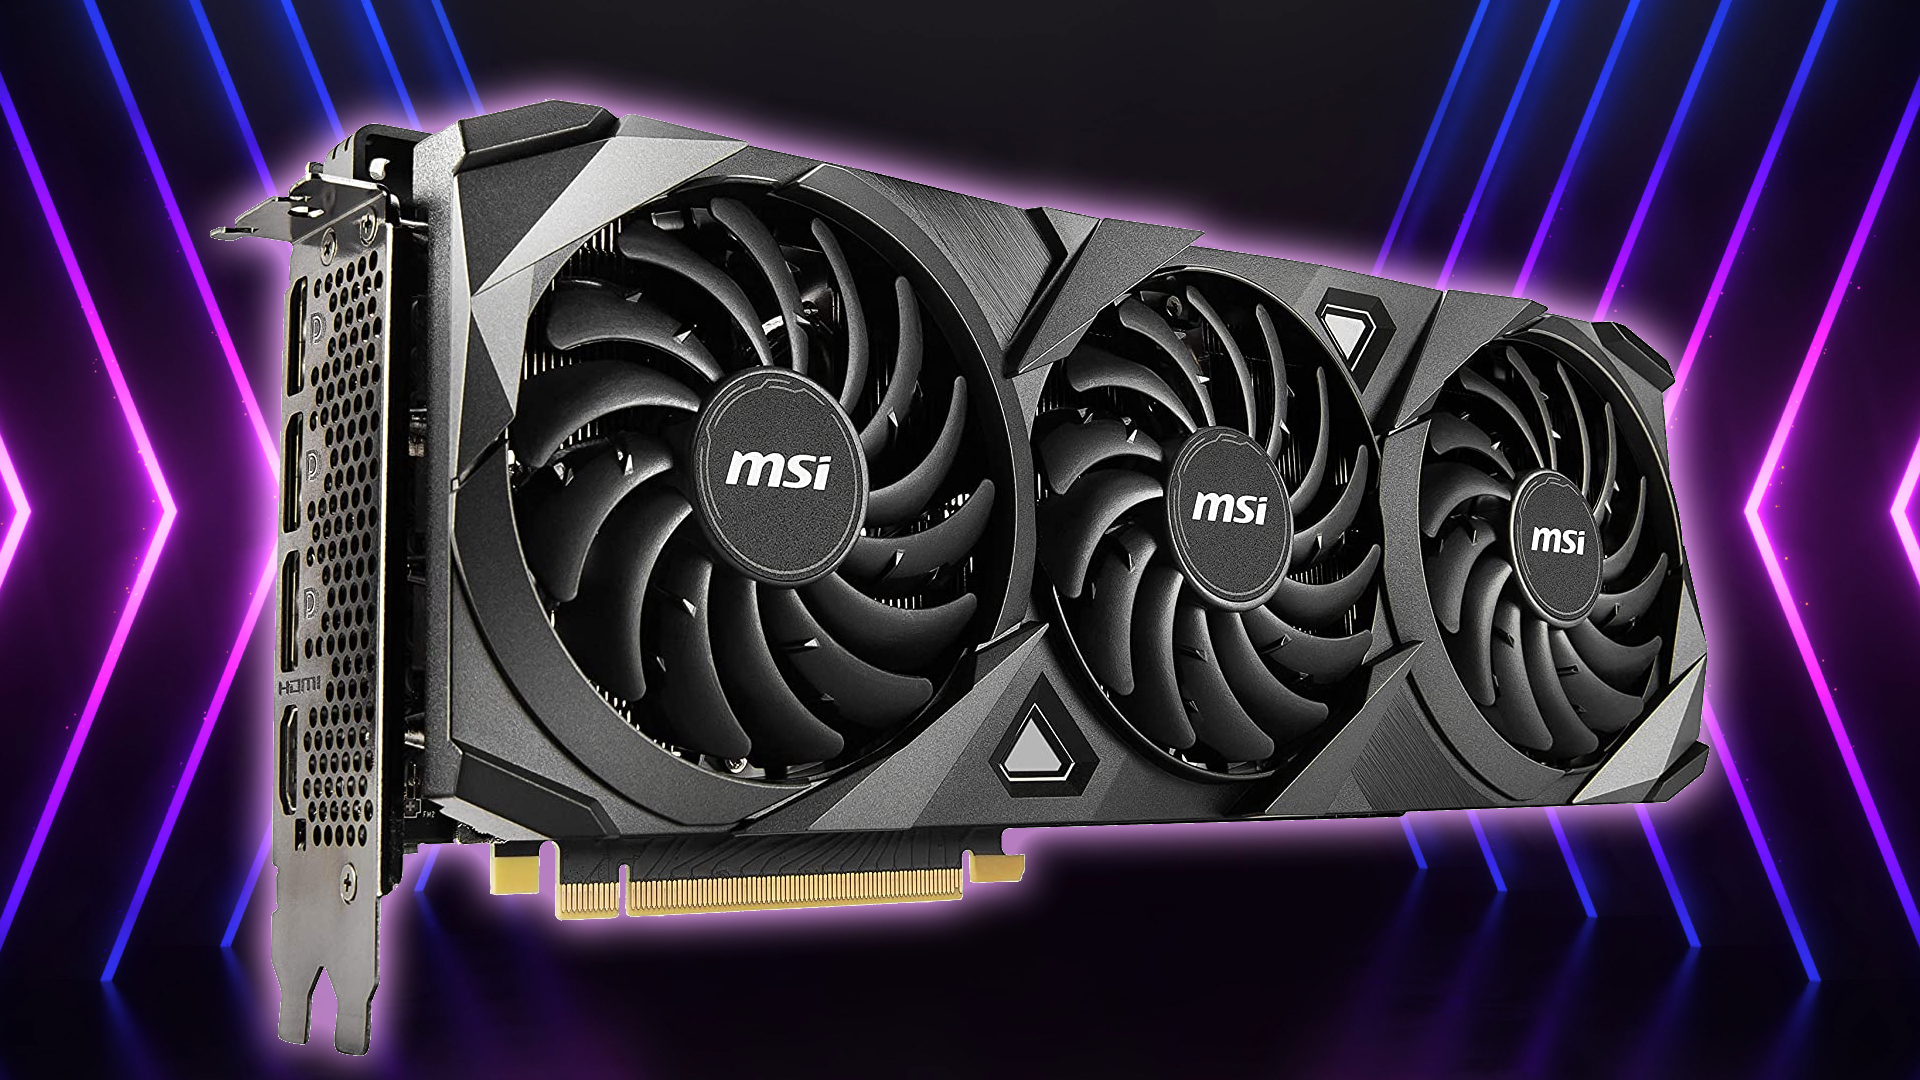 MSI RTX 3090 GPU deal costs less than an Nvidia RTX 3080 Ti